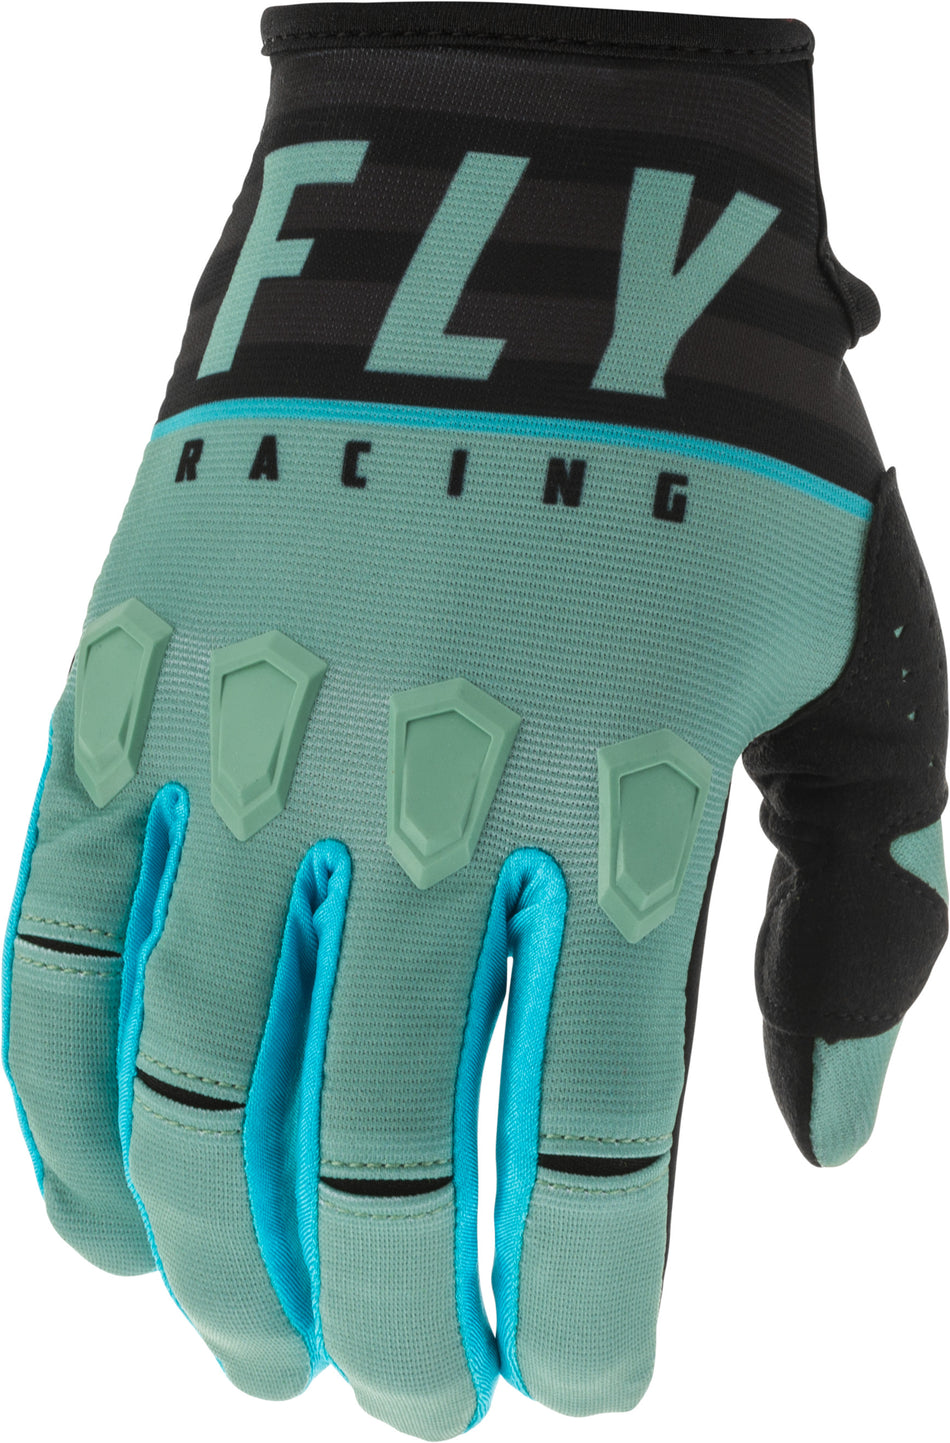 FLY RACING Kinetic K120 Gloves Sage Green/Black Sz 09 373-41609